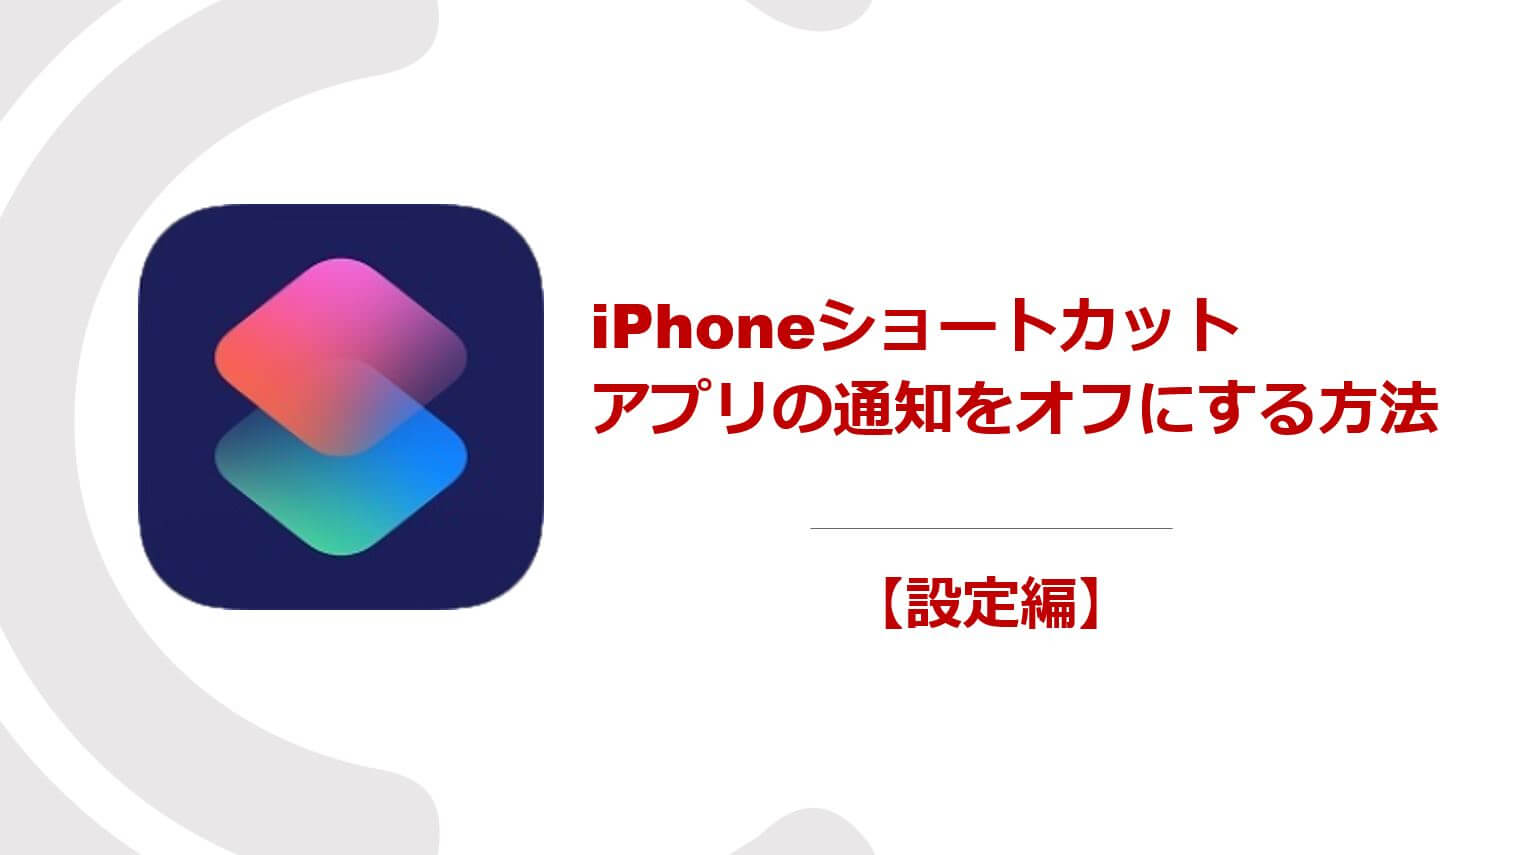 Ios14 Iphone ショートカット アプリの通知をオフにする方法 ダパンブログ Dapan Blog